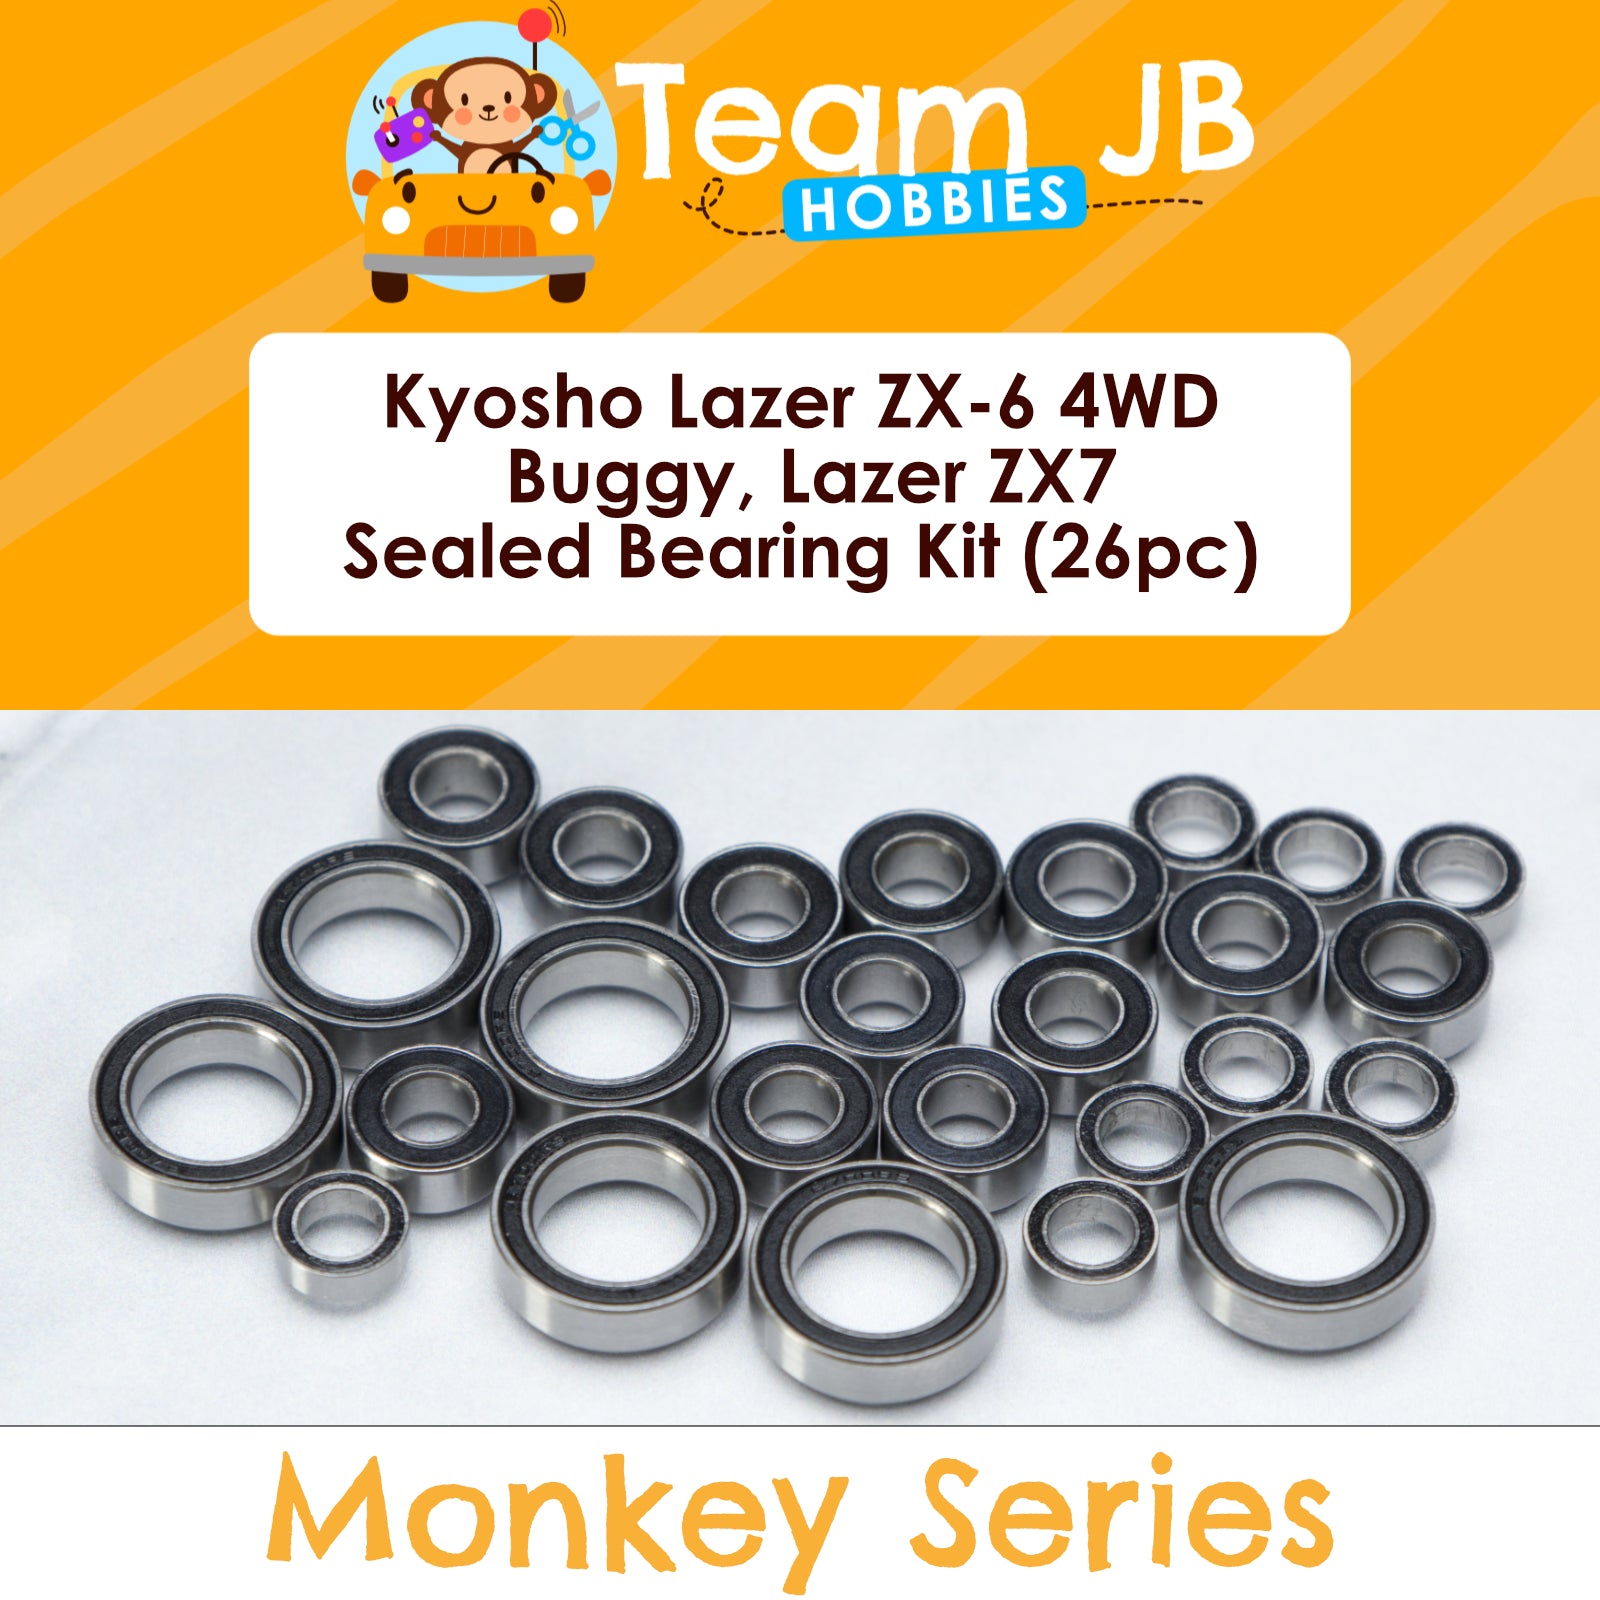 Kyosho Lazer ZX-6 4WD Buggy, Lazer ZX7  - Sealed Bearing Kit